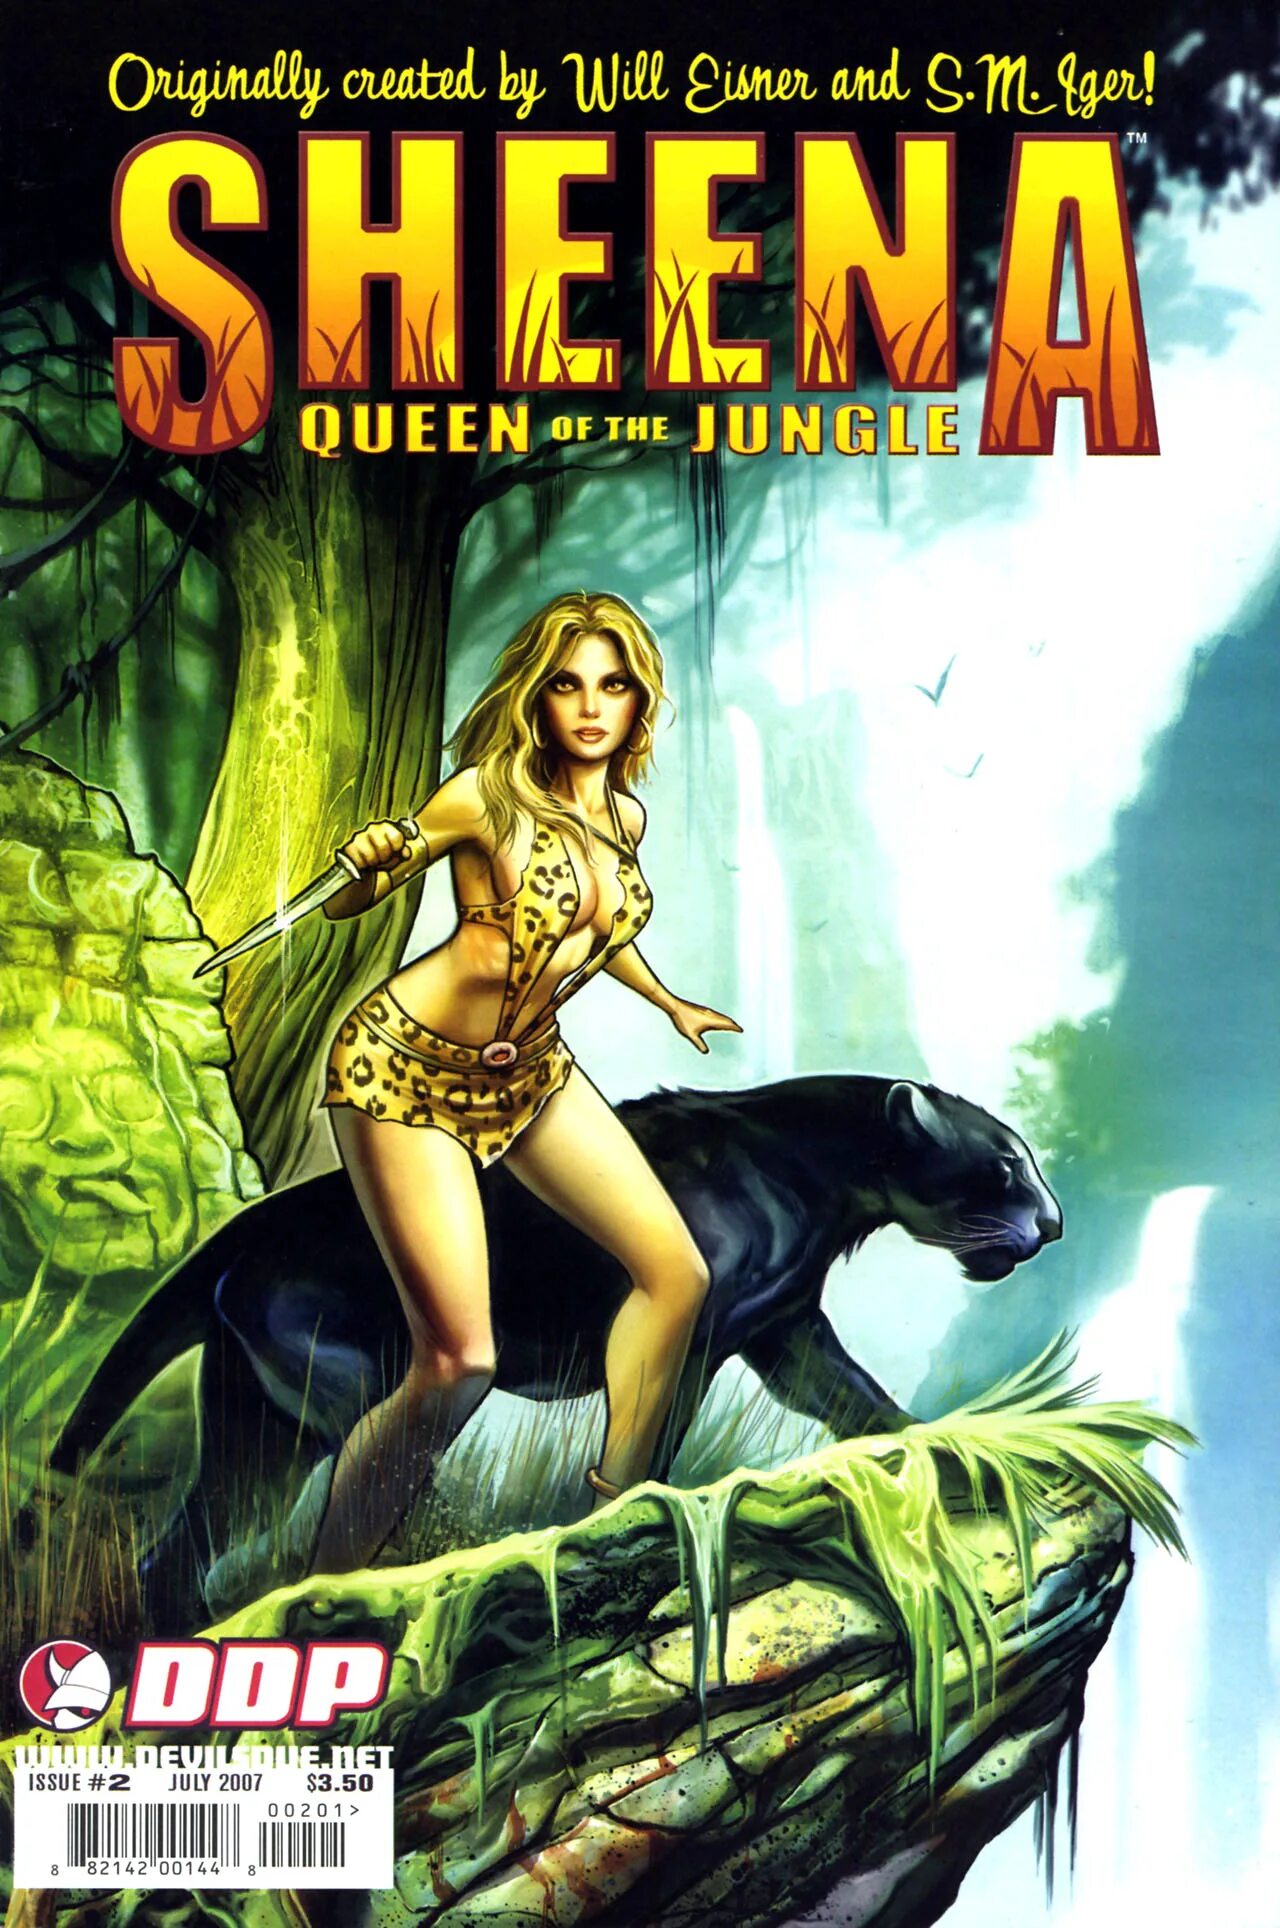 Jungle queen. Sheena Queen. Sheena Queen of the Jungle. Sheena комикс.